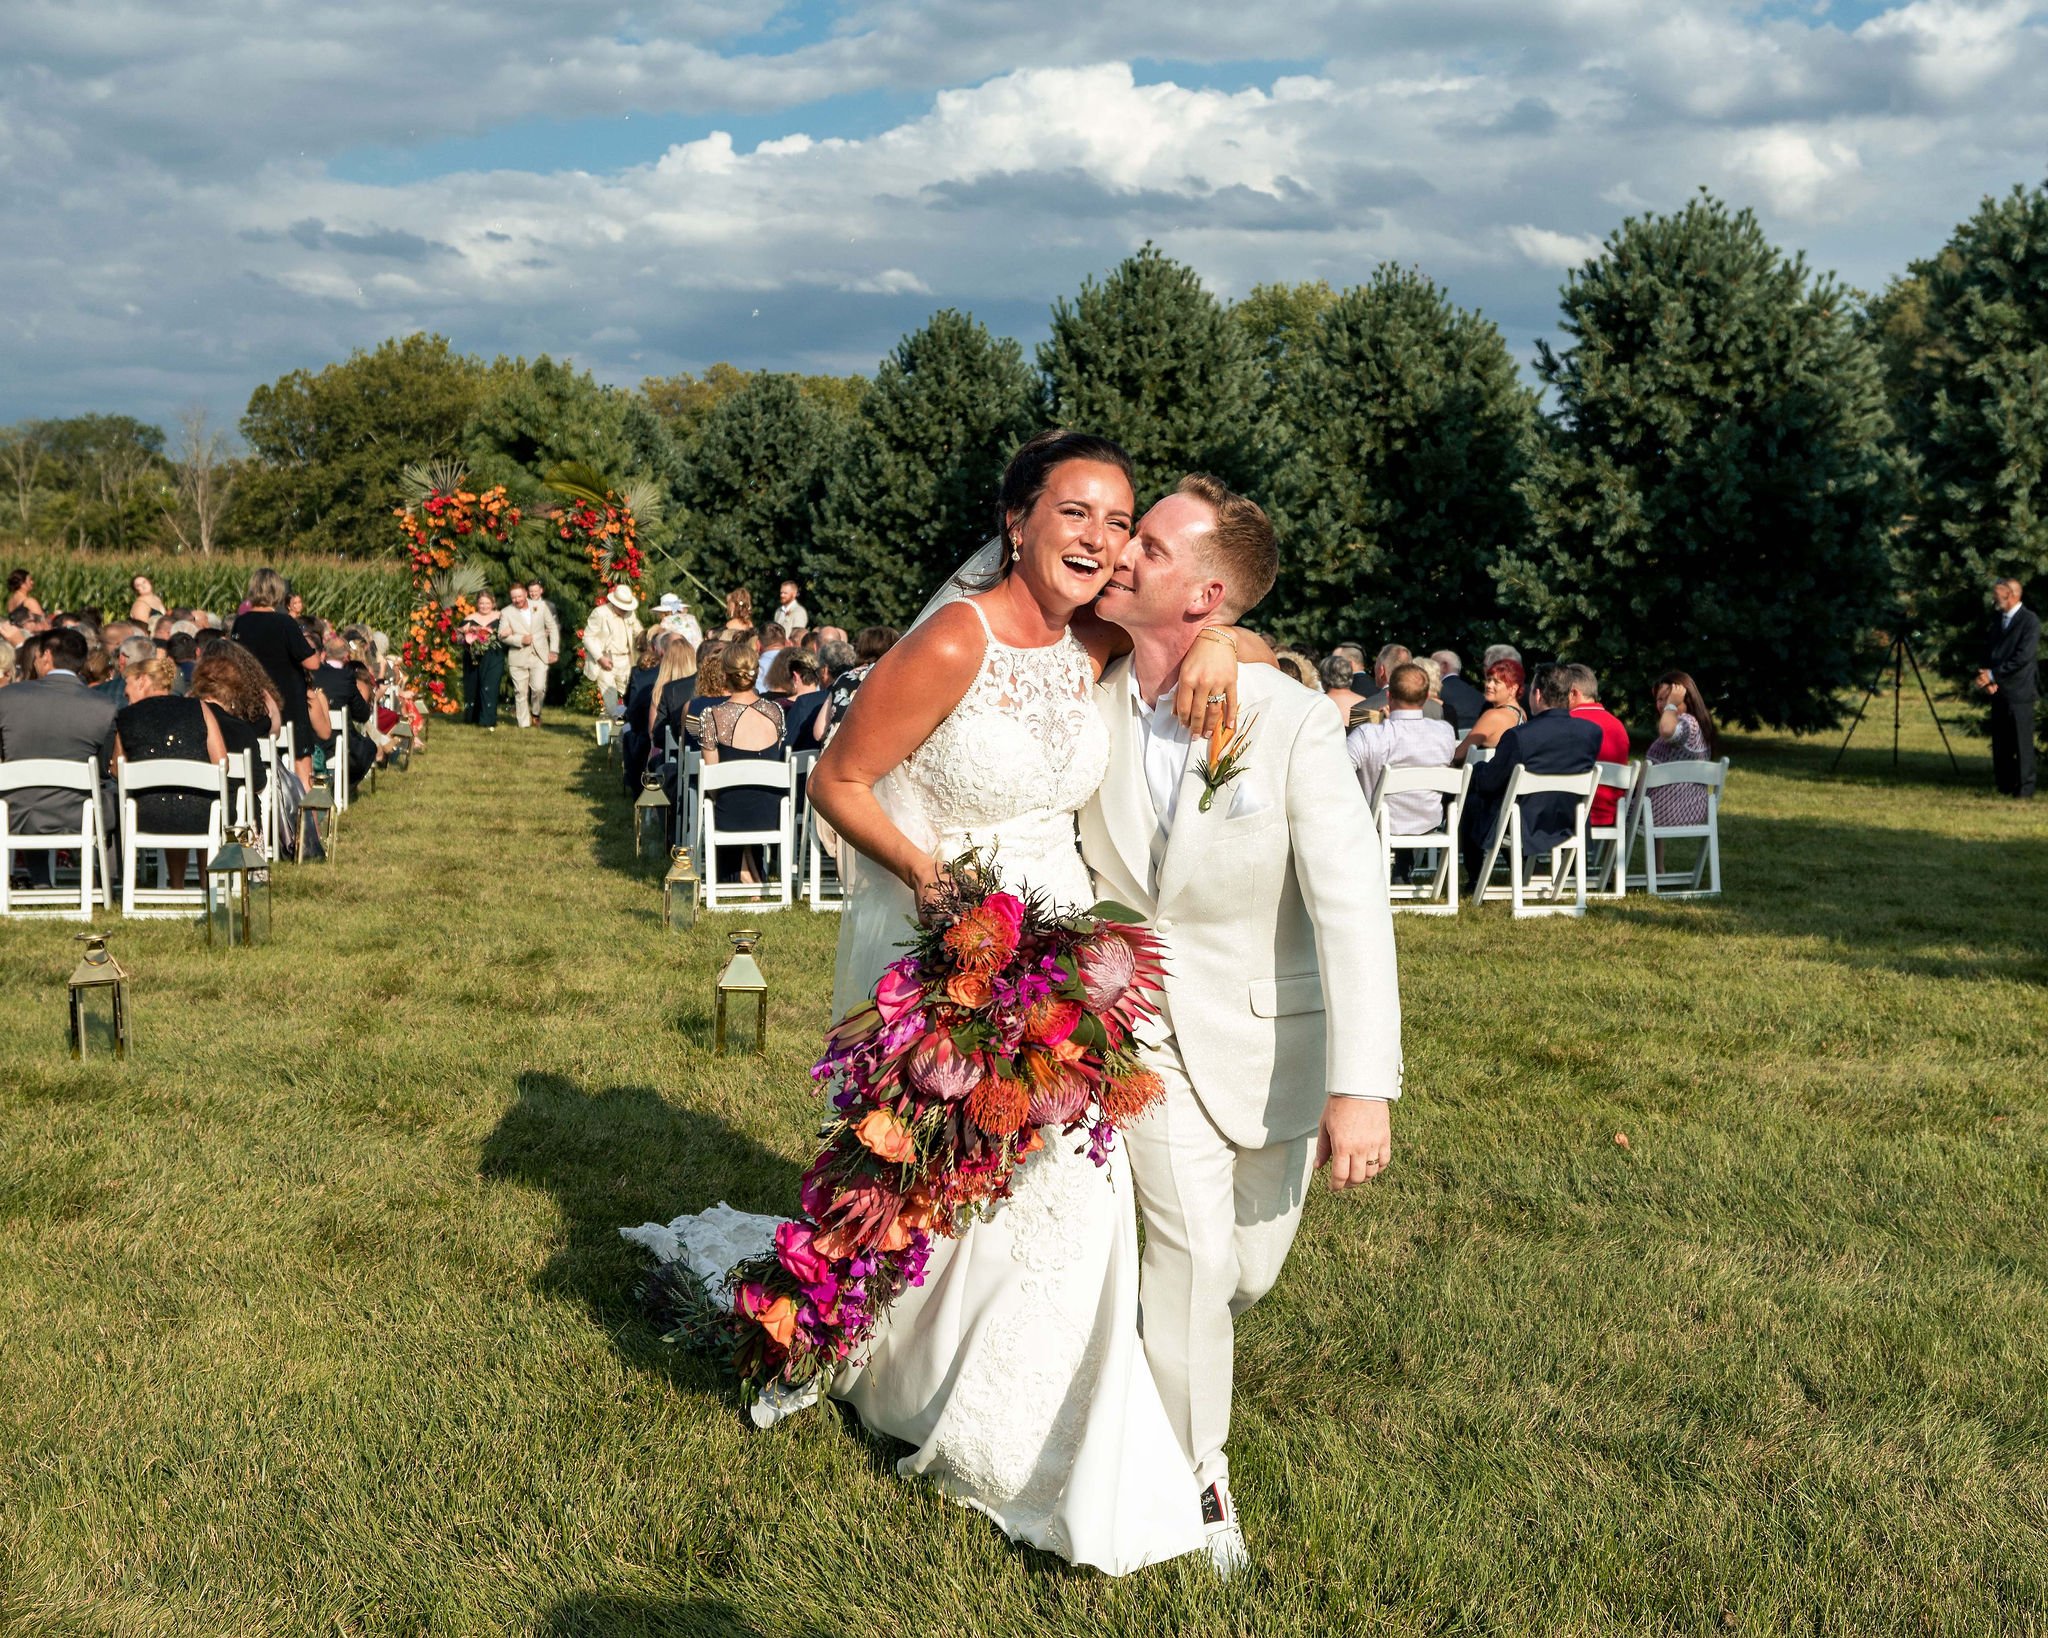 Pennsylvania Wedding - Bride and Groom - Ceremony.jpg